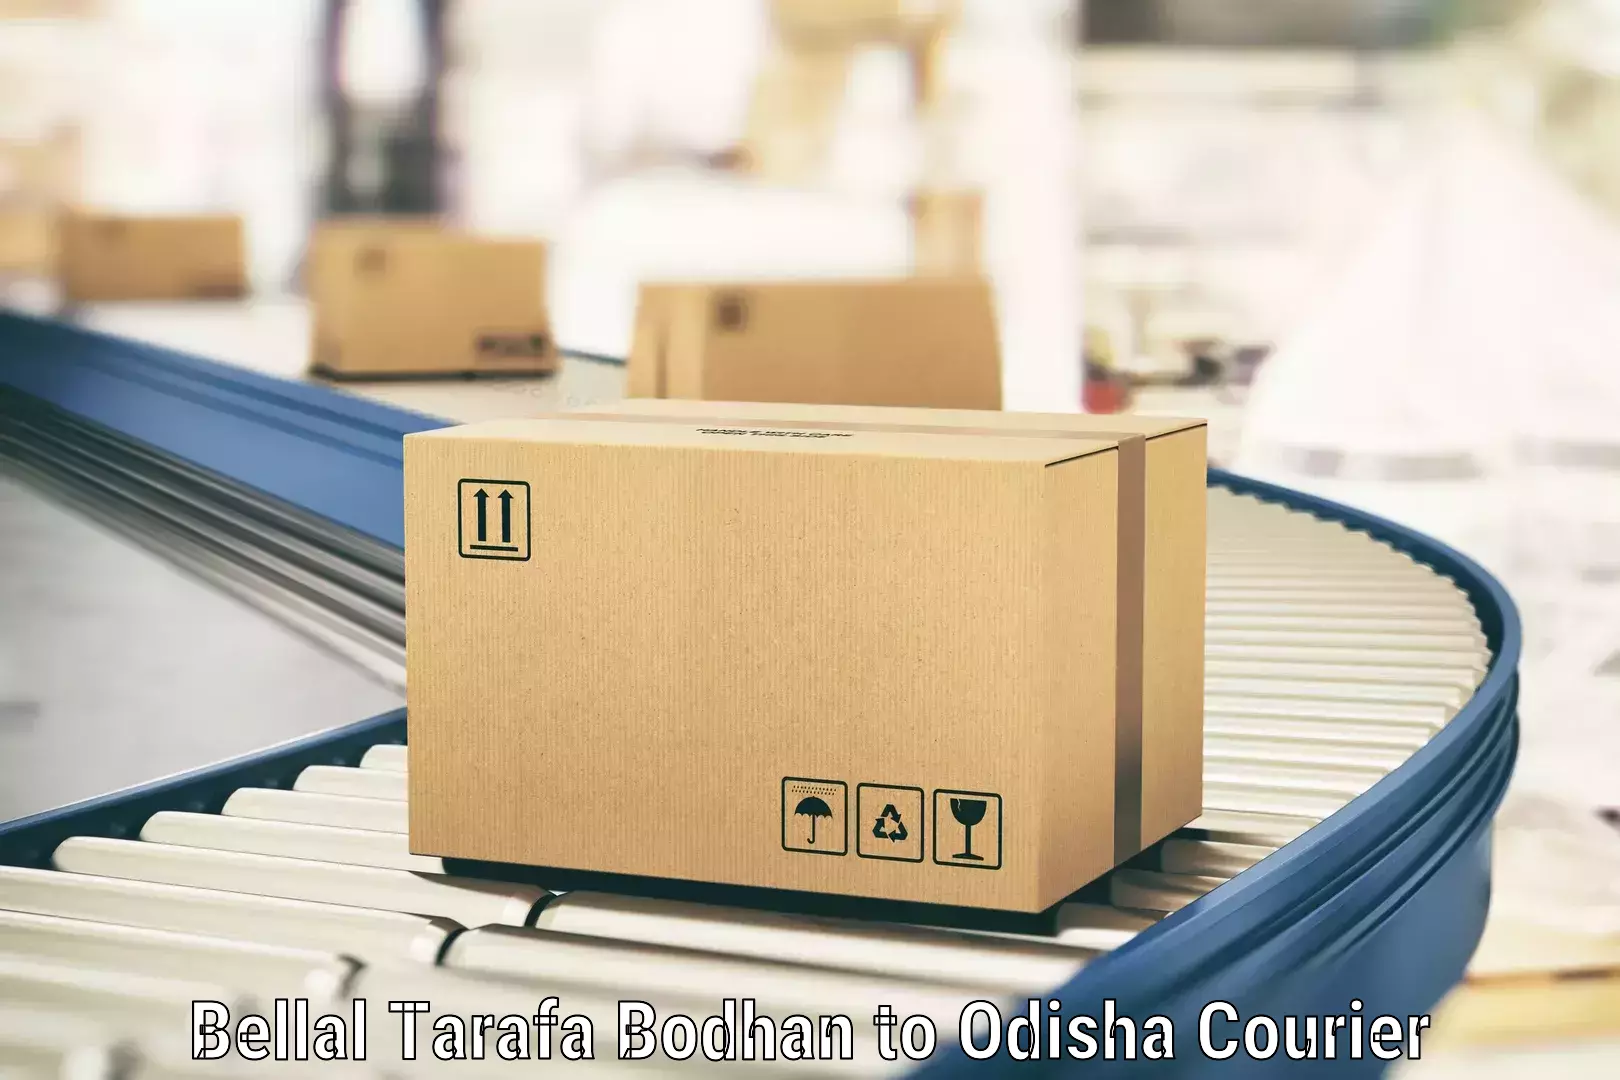 Reliable parcel services in Bellal Tarafa Bodhan to Ghatgaon